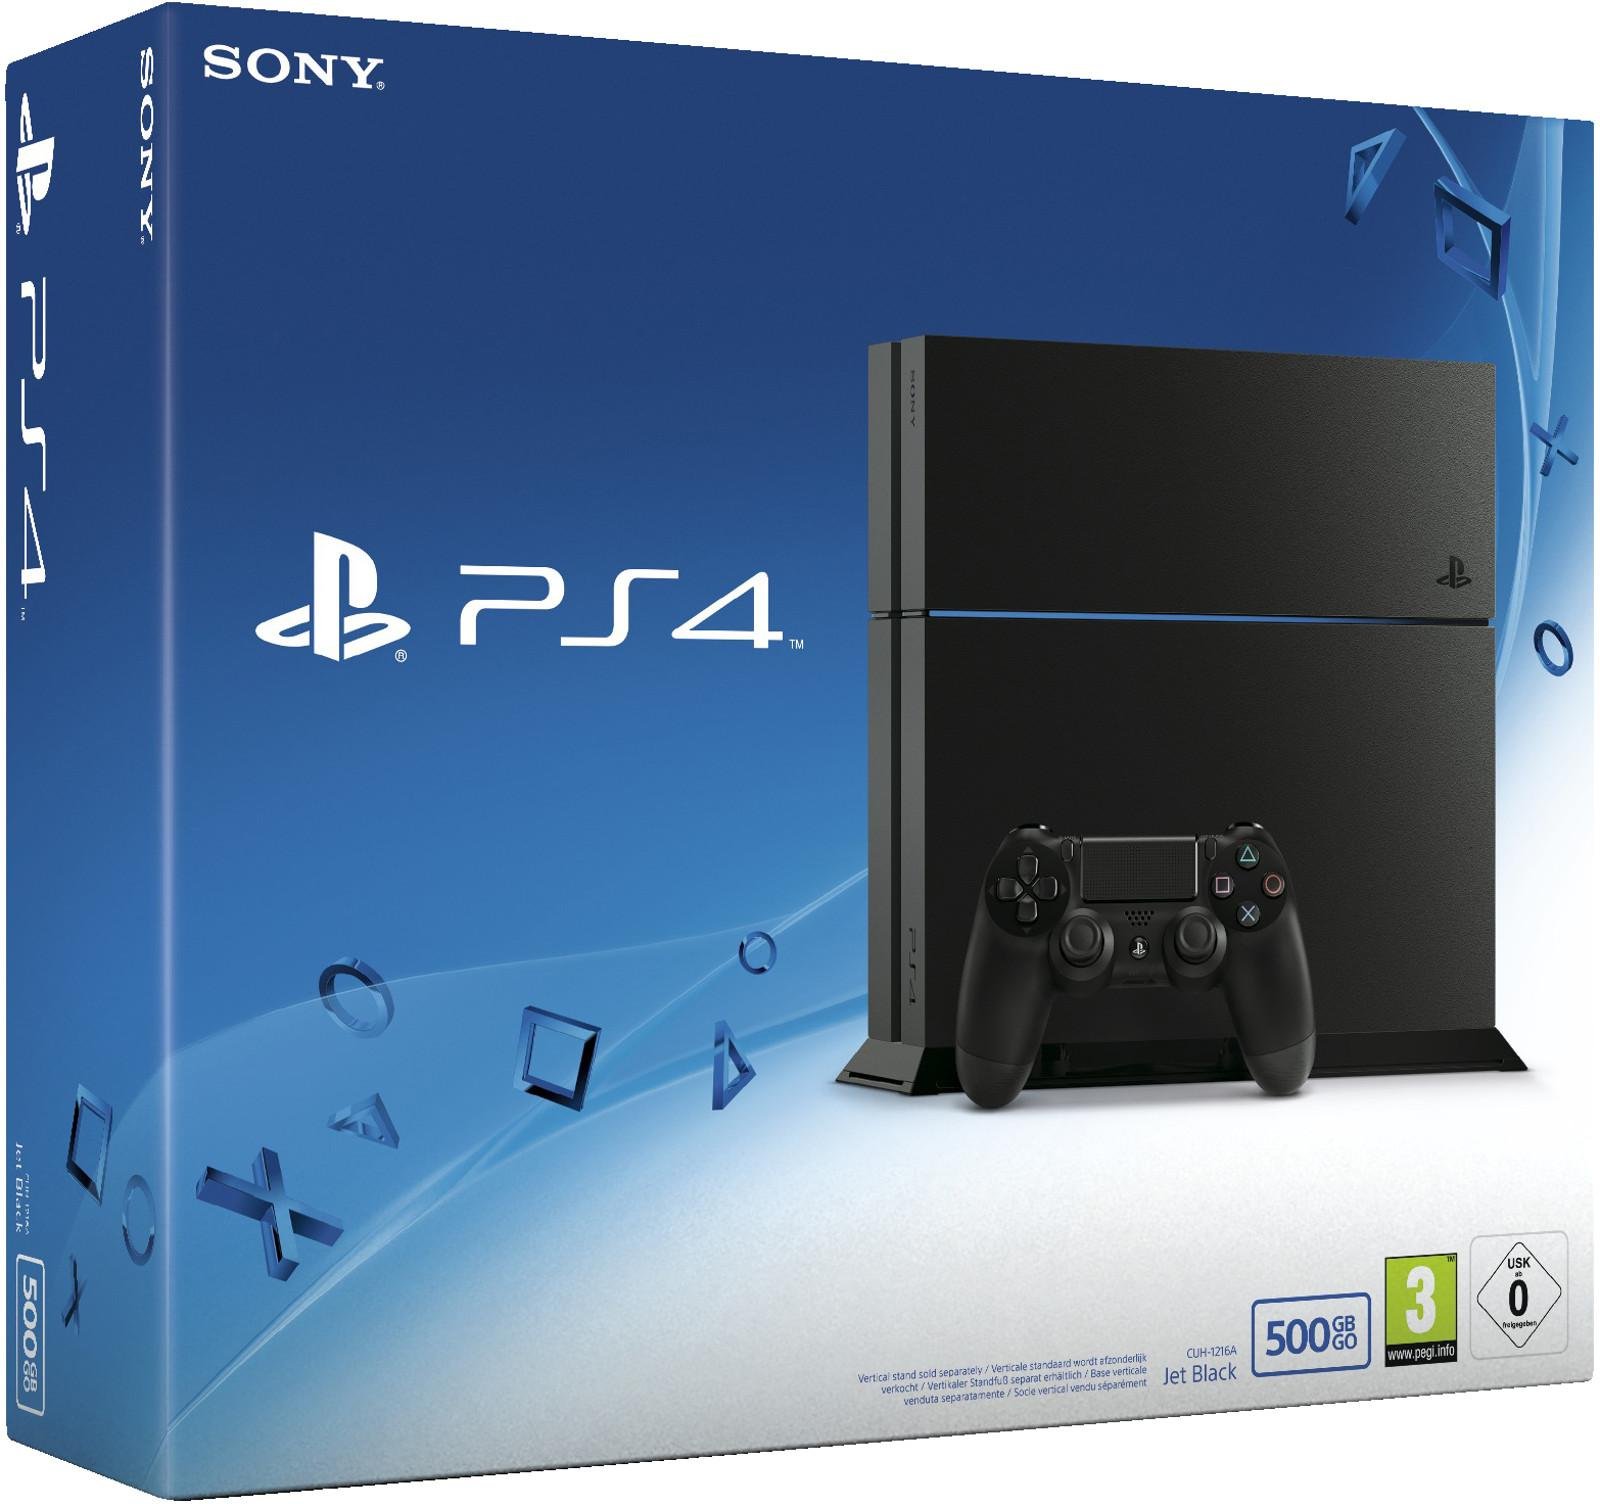 Sony PlayStation 4 (PS4) 500GB ab 299,00 € im Preisvergleich kaufen